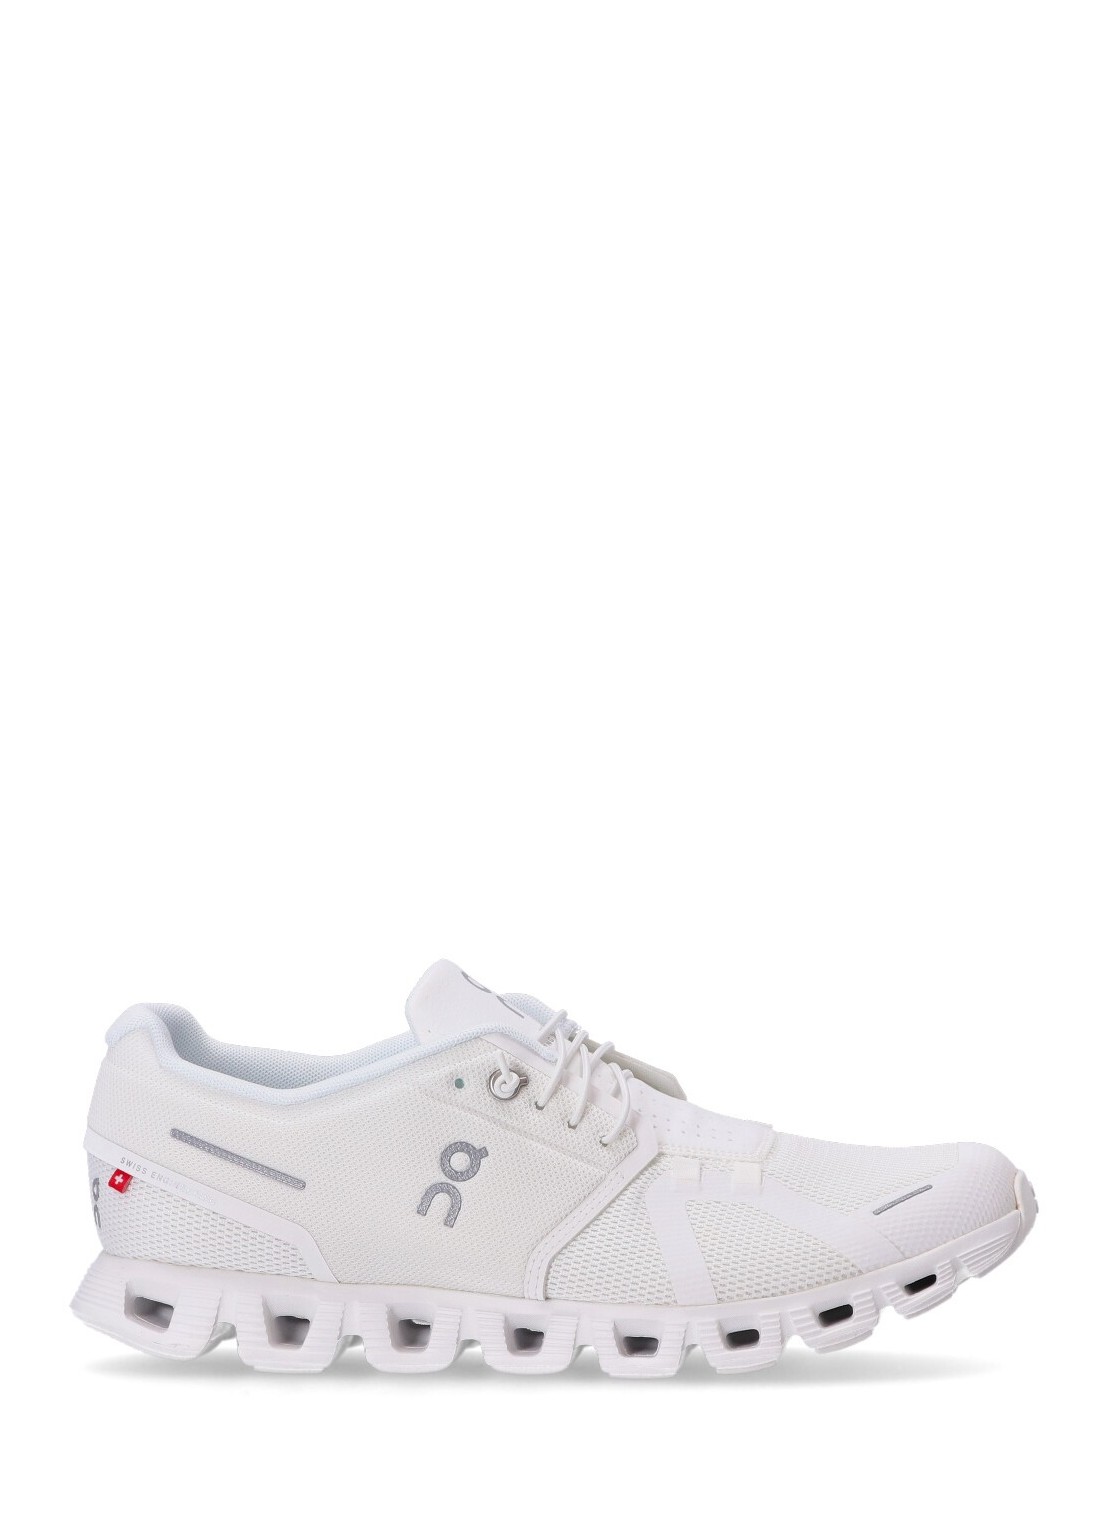 Sneaker on running sneaker man cloud 5 5998376 undyed white white talla 44.5
 